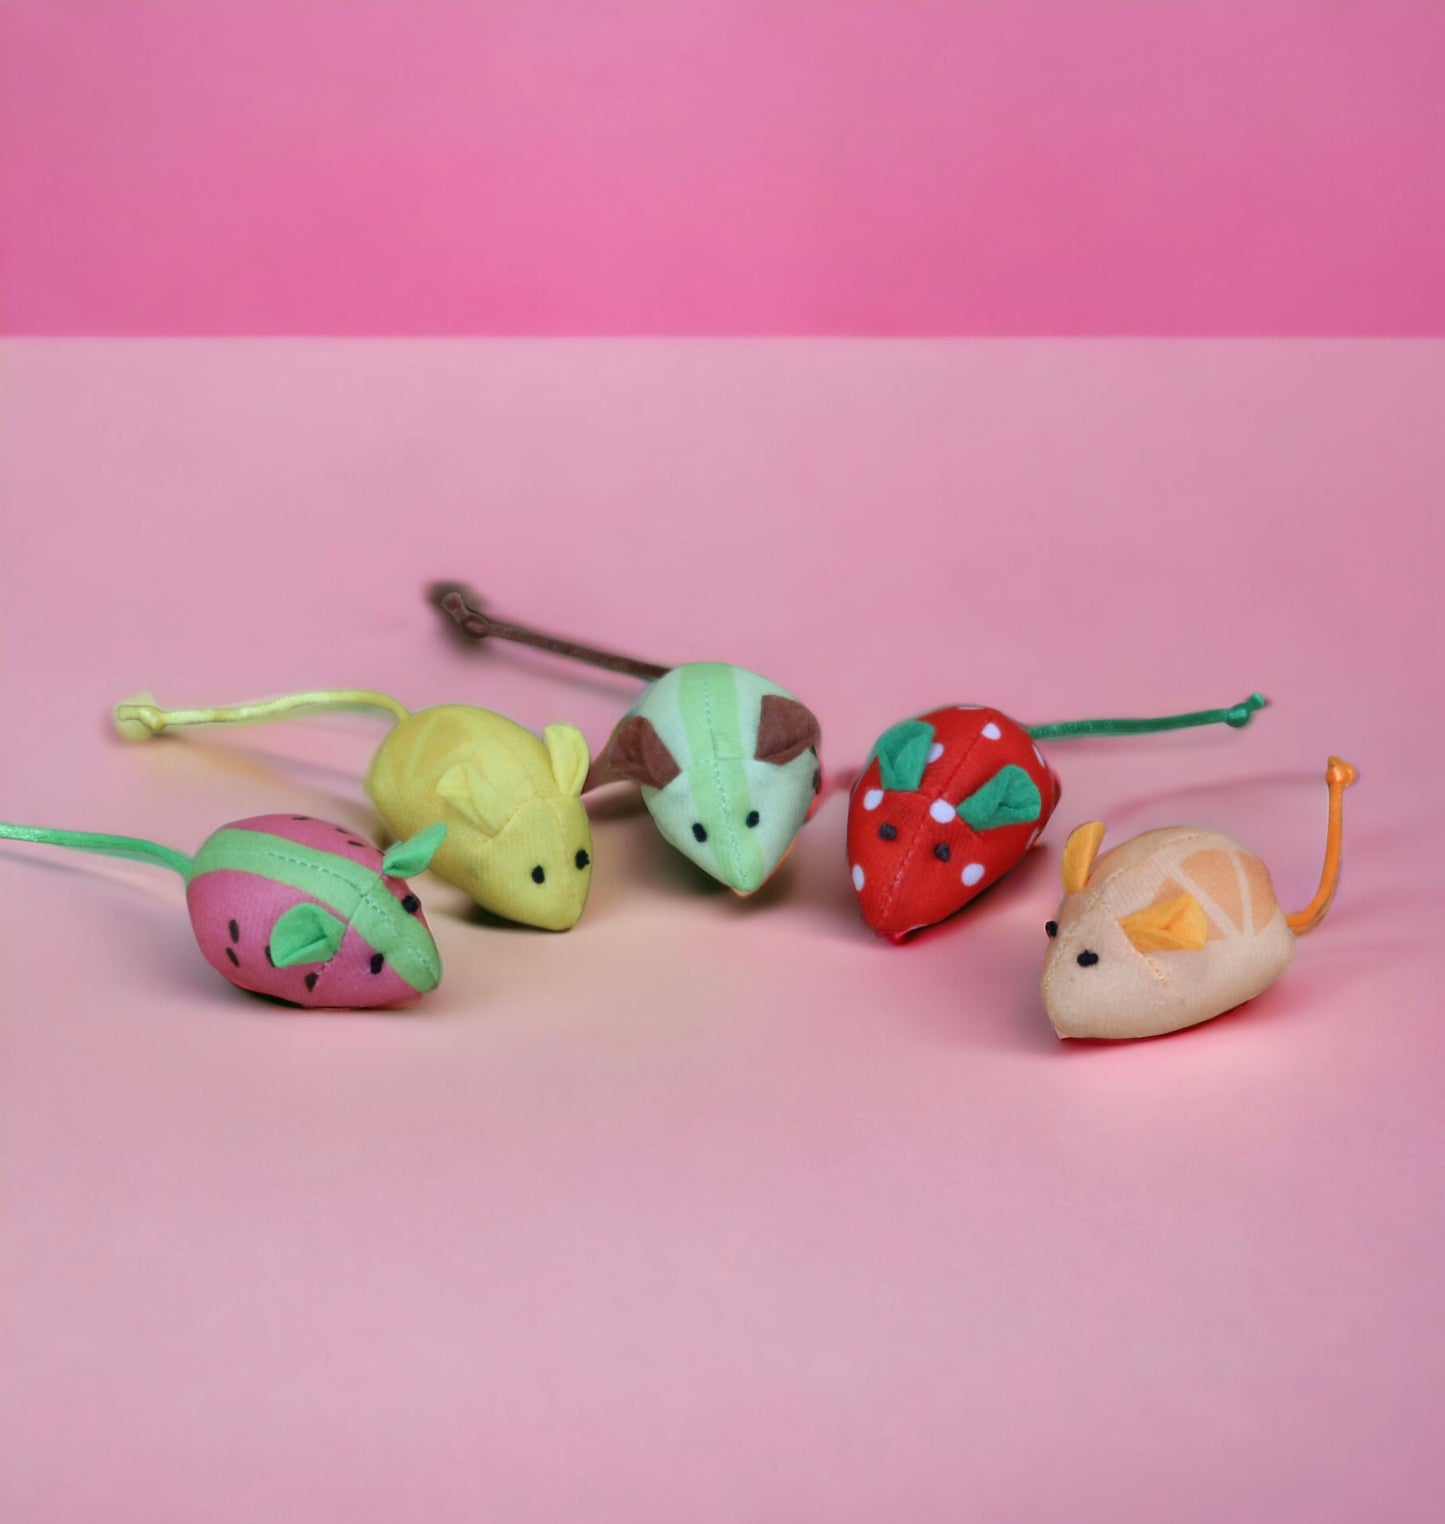 X 3 Fruit Cat Toy Mice / Kitty Fun Gift / Kitten Game